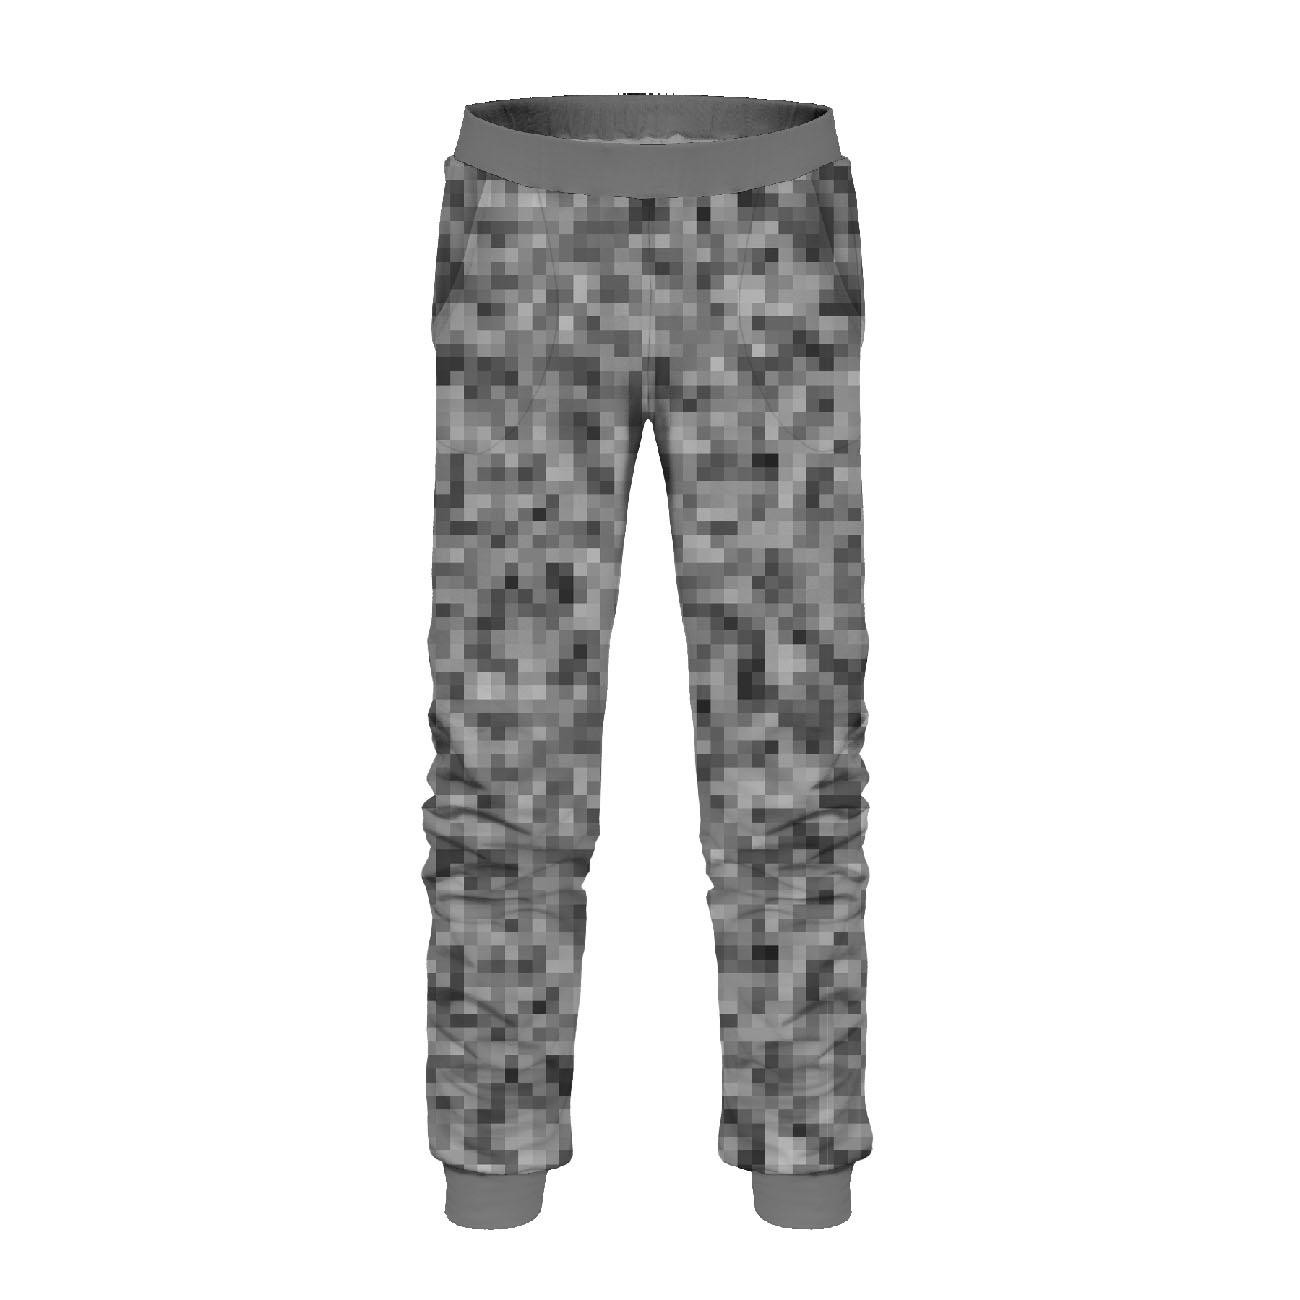 CHILDREN'S JOGGERS (LYON) - PIXELS pat. 2 / grey - looped knit fabric